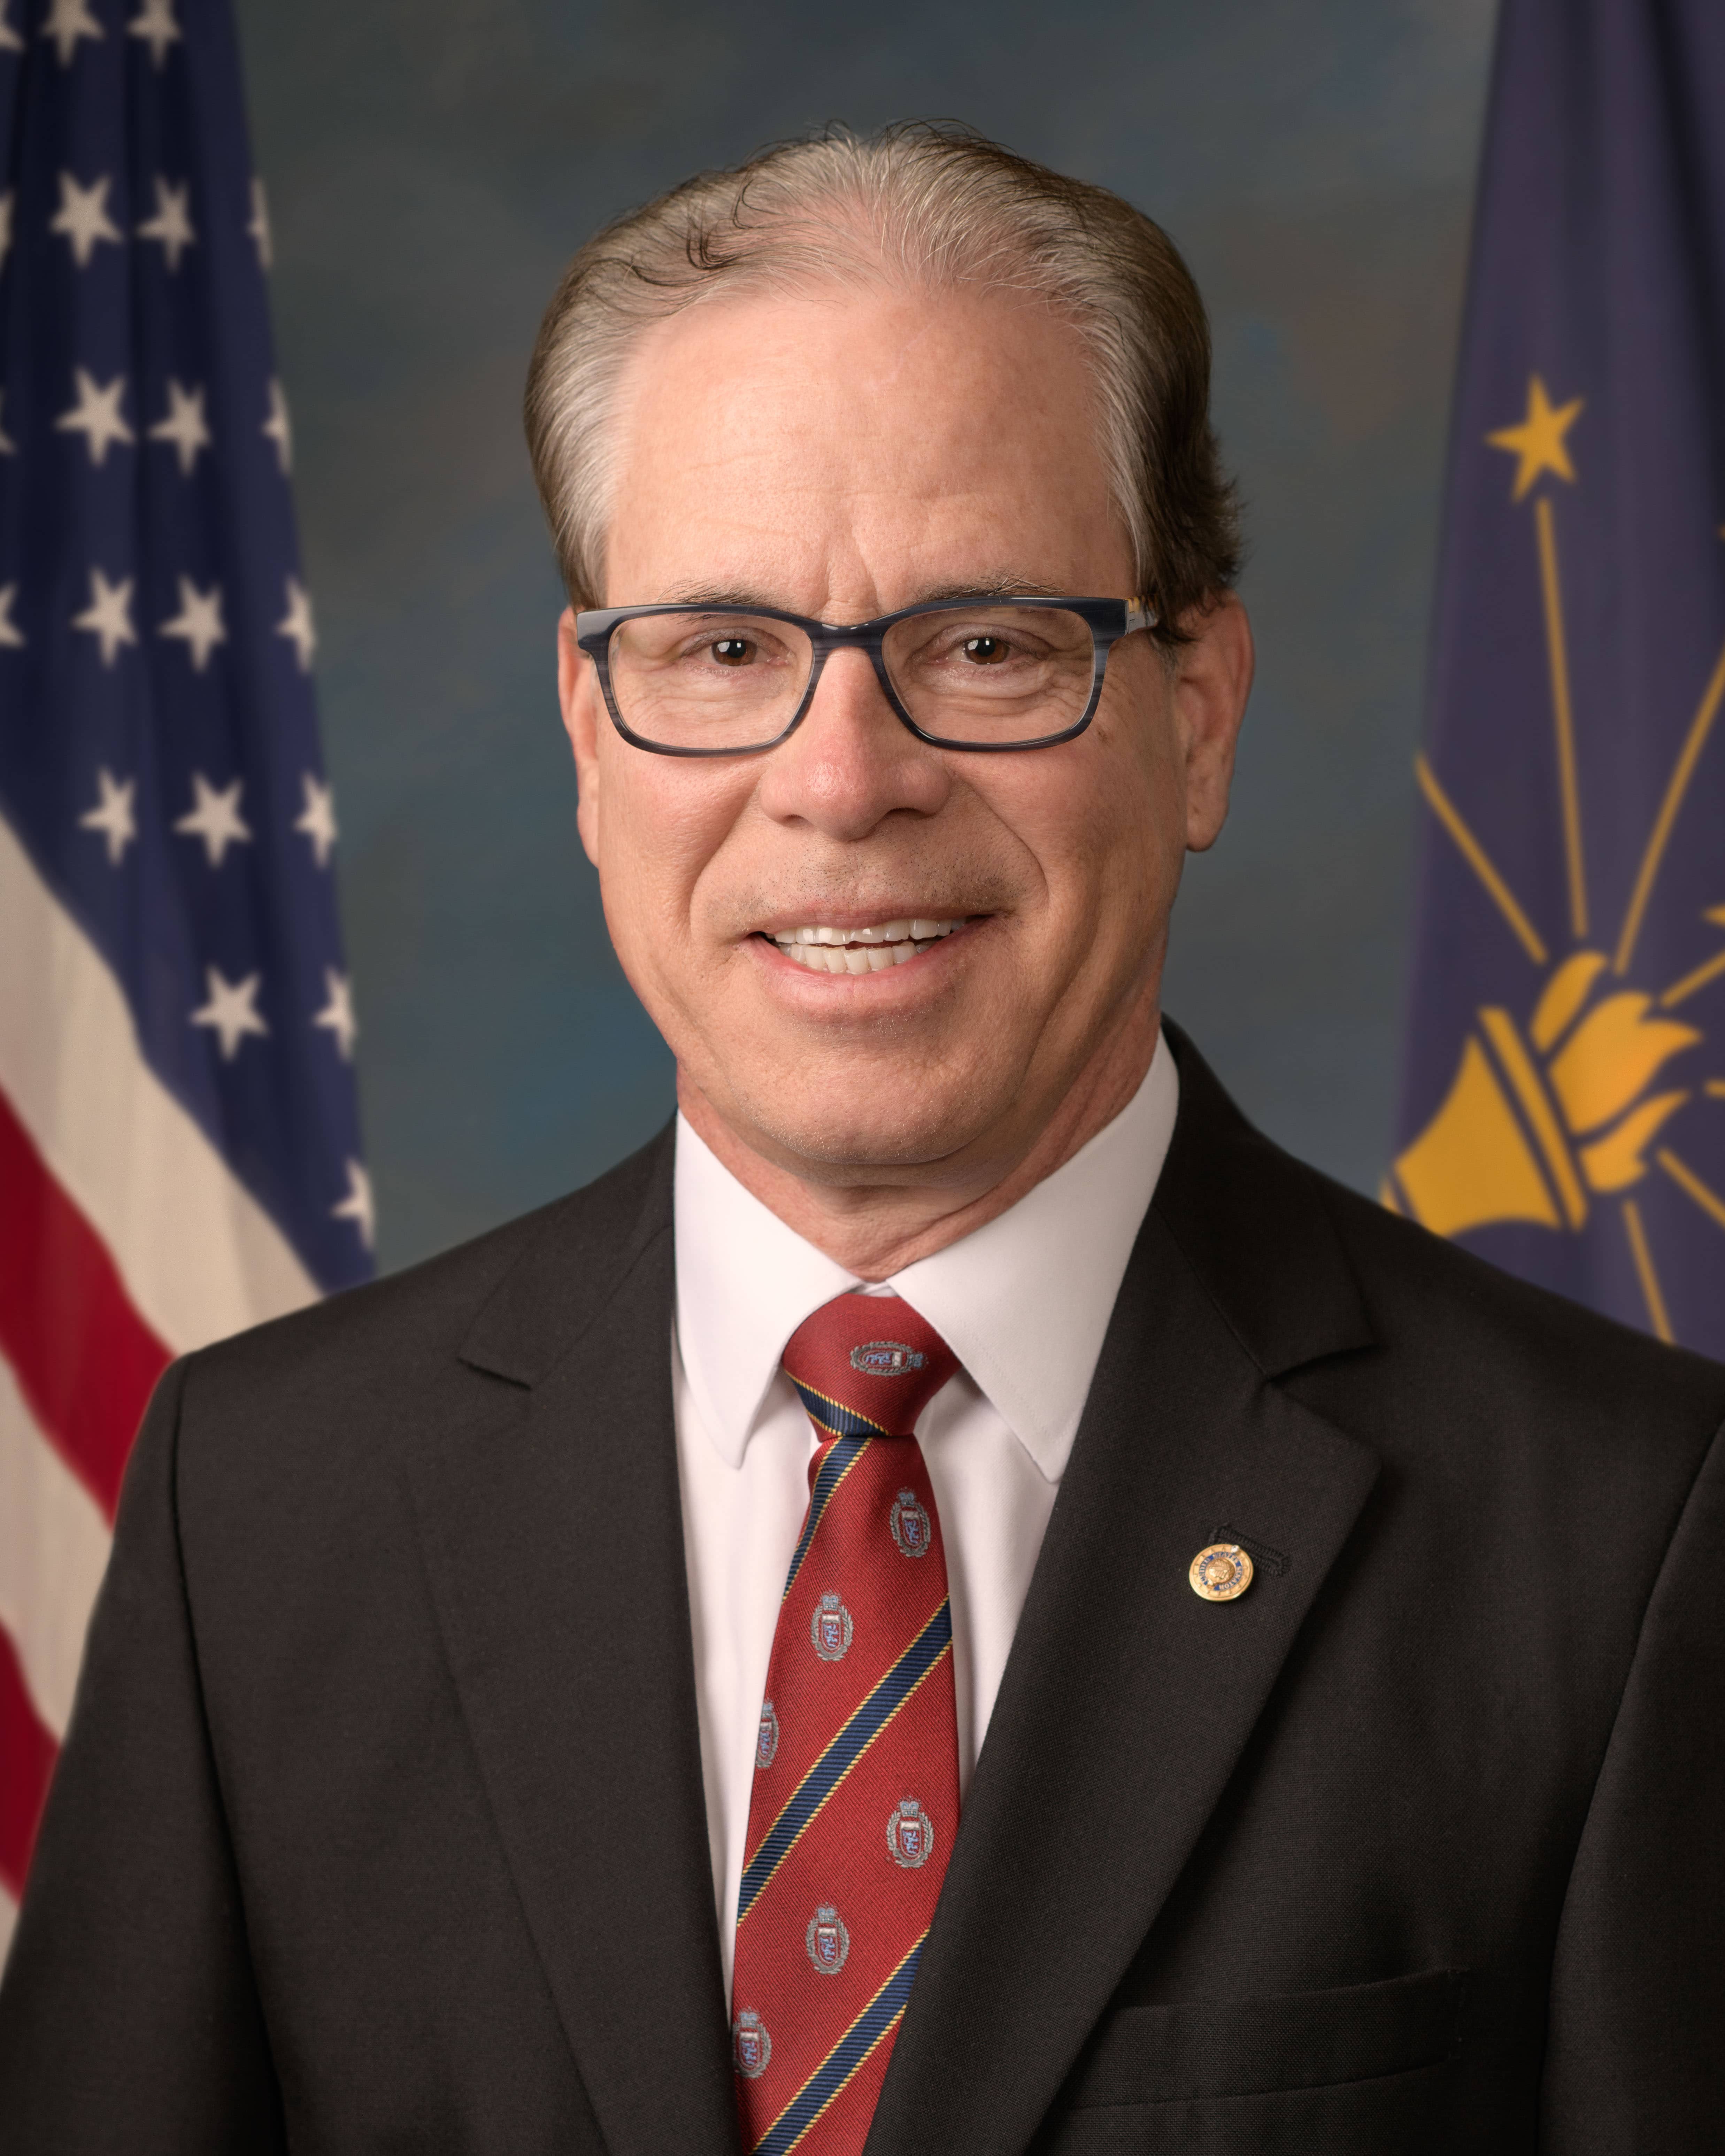 Image of Mike Braun, U.S. Senate, Republican Party